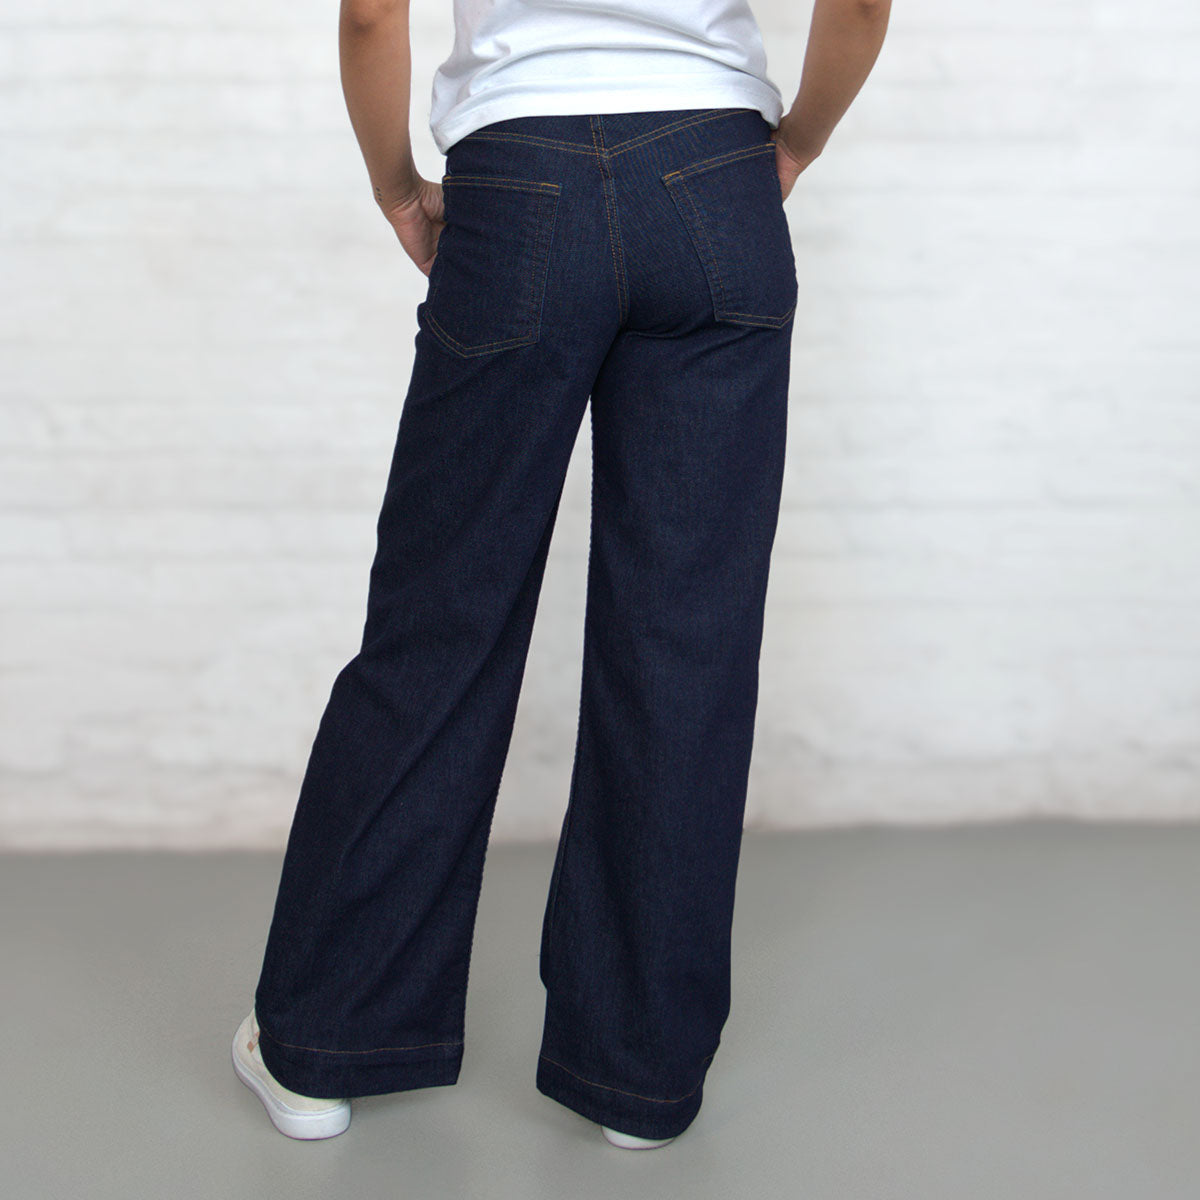 Women's Straight Leg Jeans for sale in Jeddo, Alabama